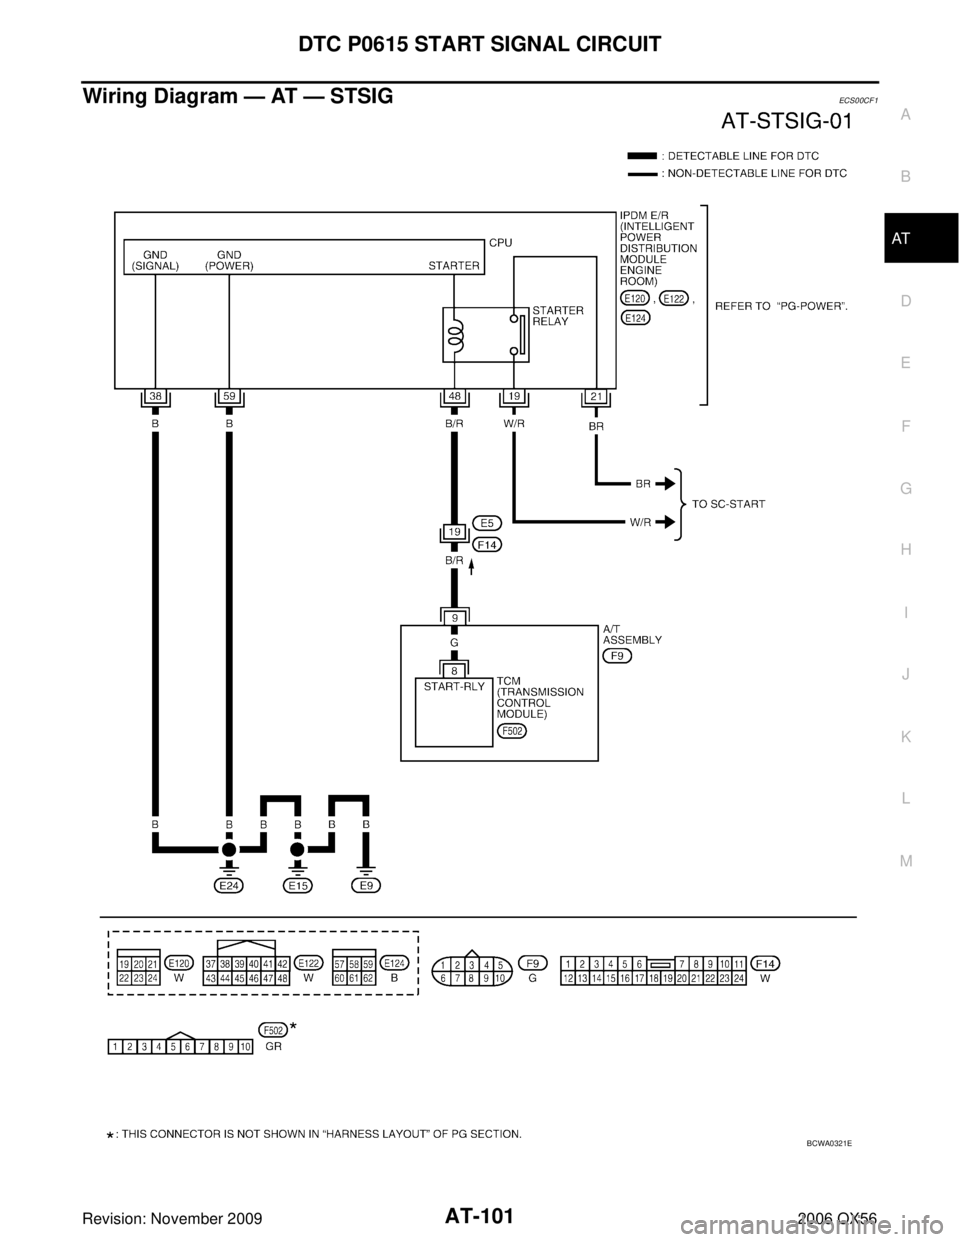 INFINITI QX56 2006  Factory User Guide DTC P0615 START SIGNAL CIRCUITAT-101
DE
F
G H
I
J
K L
M A
B
AT
Revision: November 2009 2006 QX56
Wiring Diagram — AT — STSIGECS00CF1
BCWA0321E 